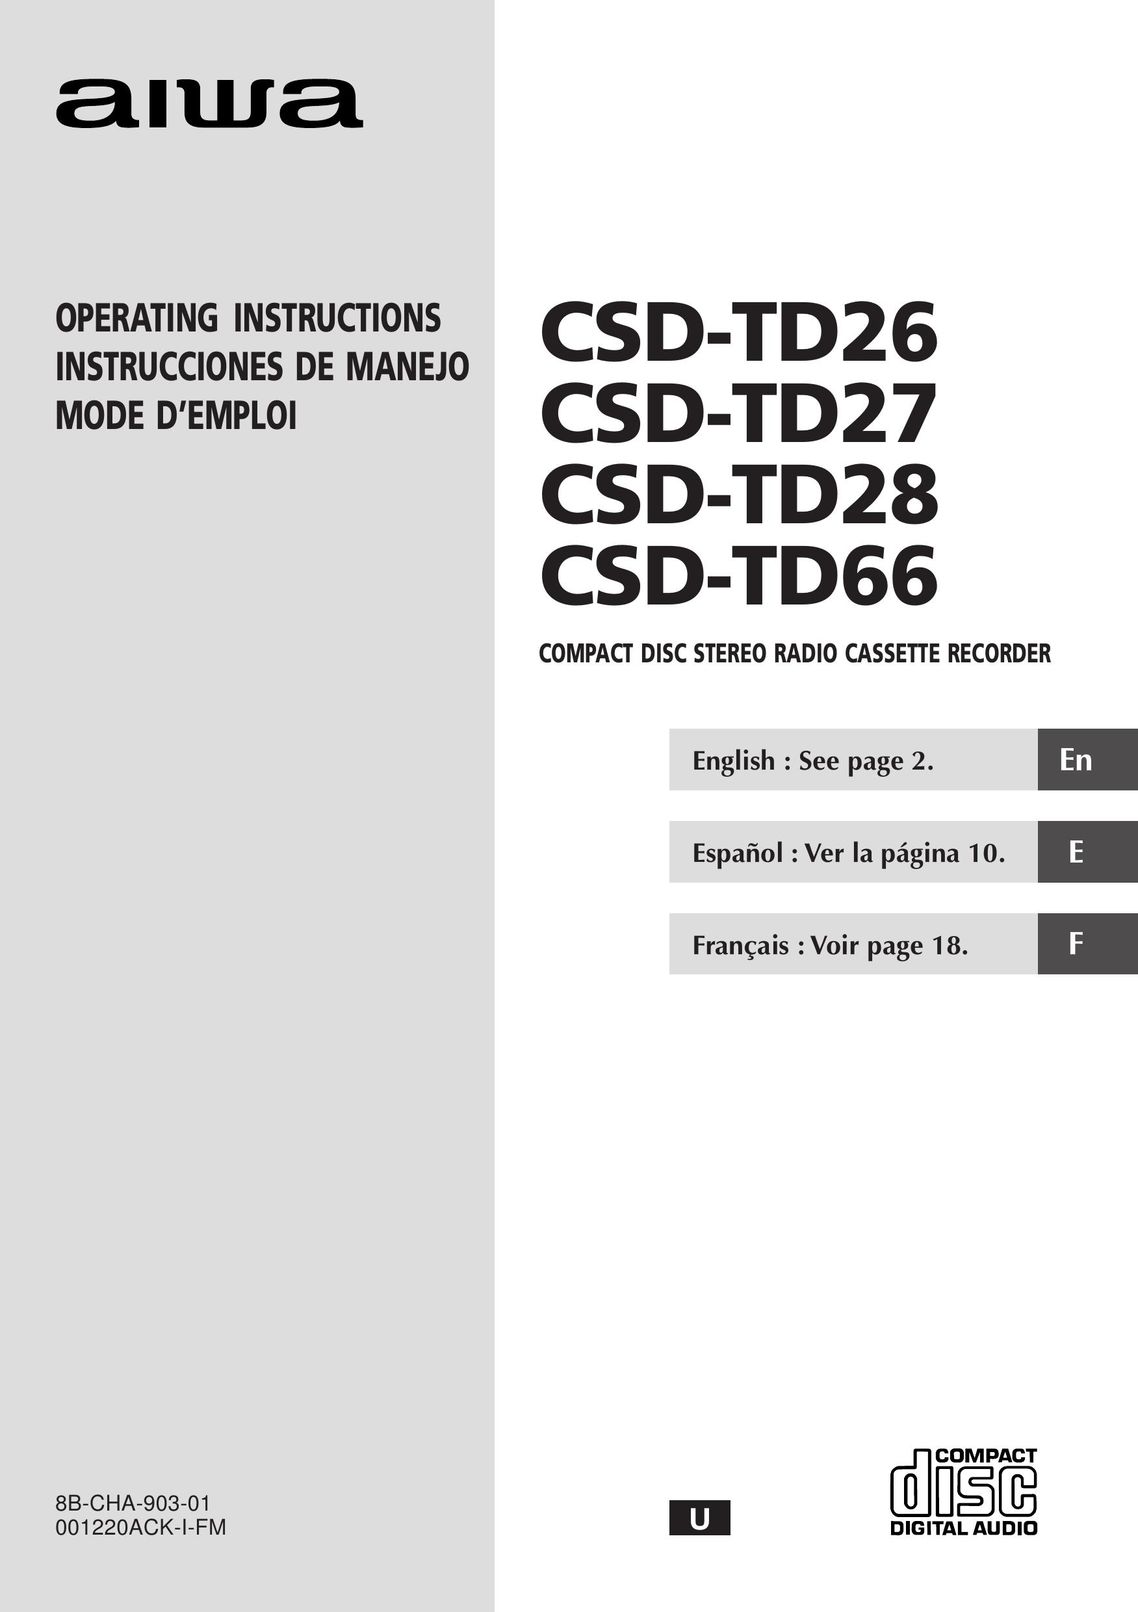 Aiwa CSD-TD27 CD Player User Manual (Page 1)